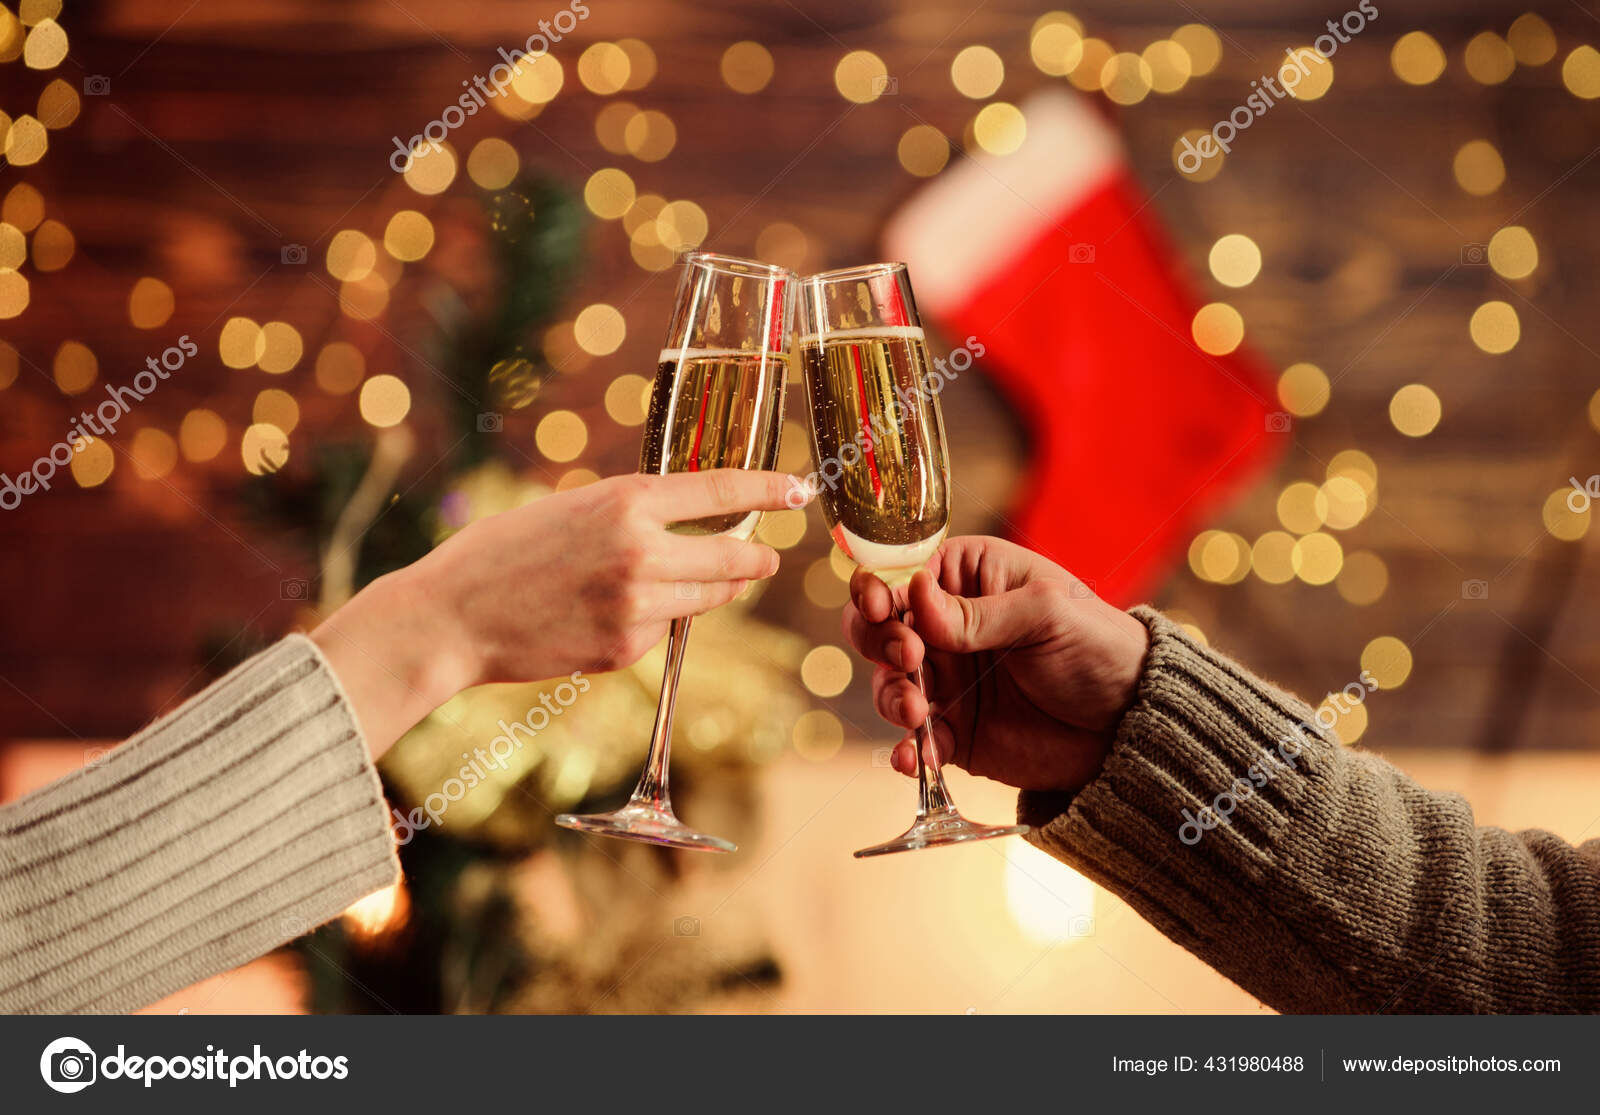 https://st2.depositphotos.com/2760050/43198/i/1600/depositphotos_431980488-stock-photo-cheers-concept-new-year-tradition.jpg